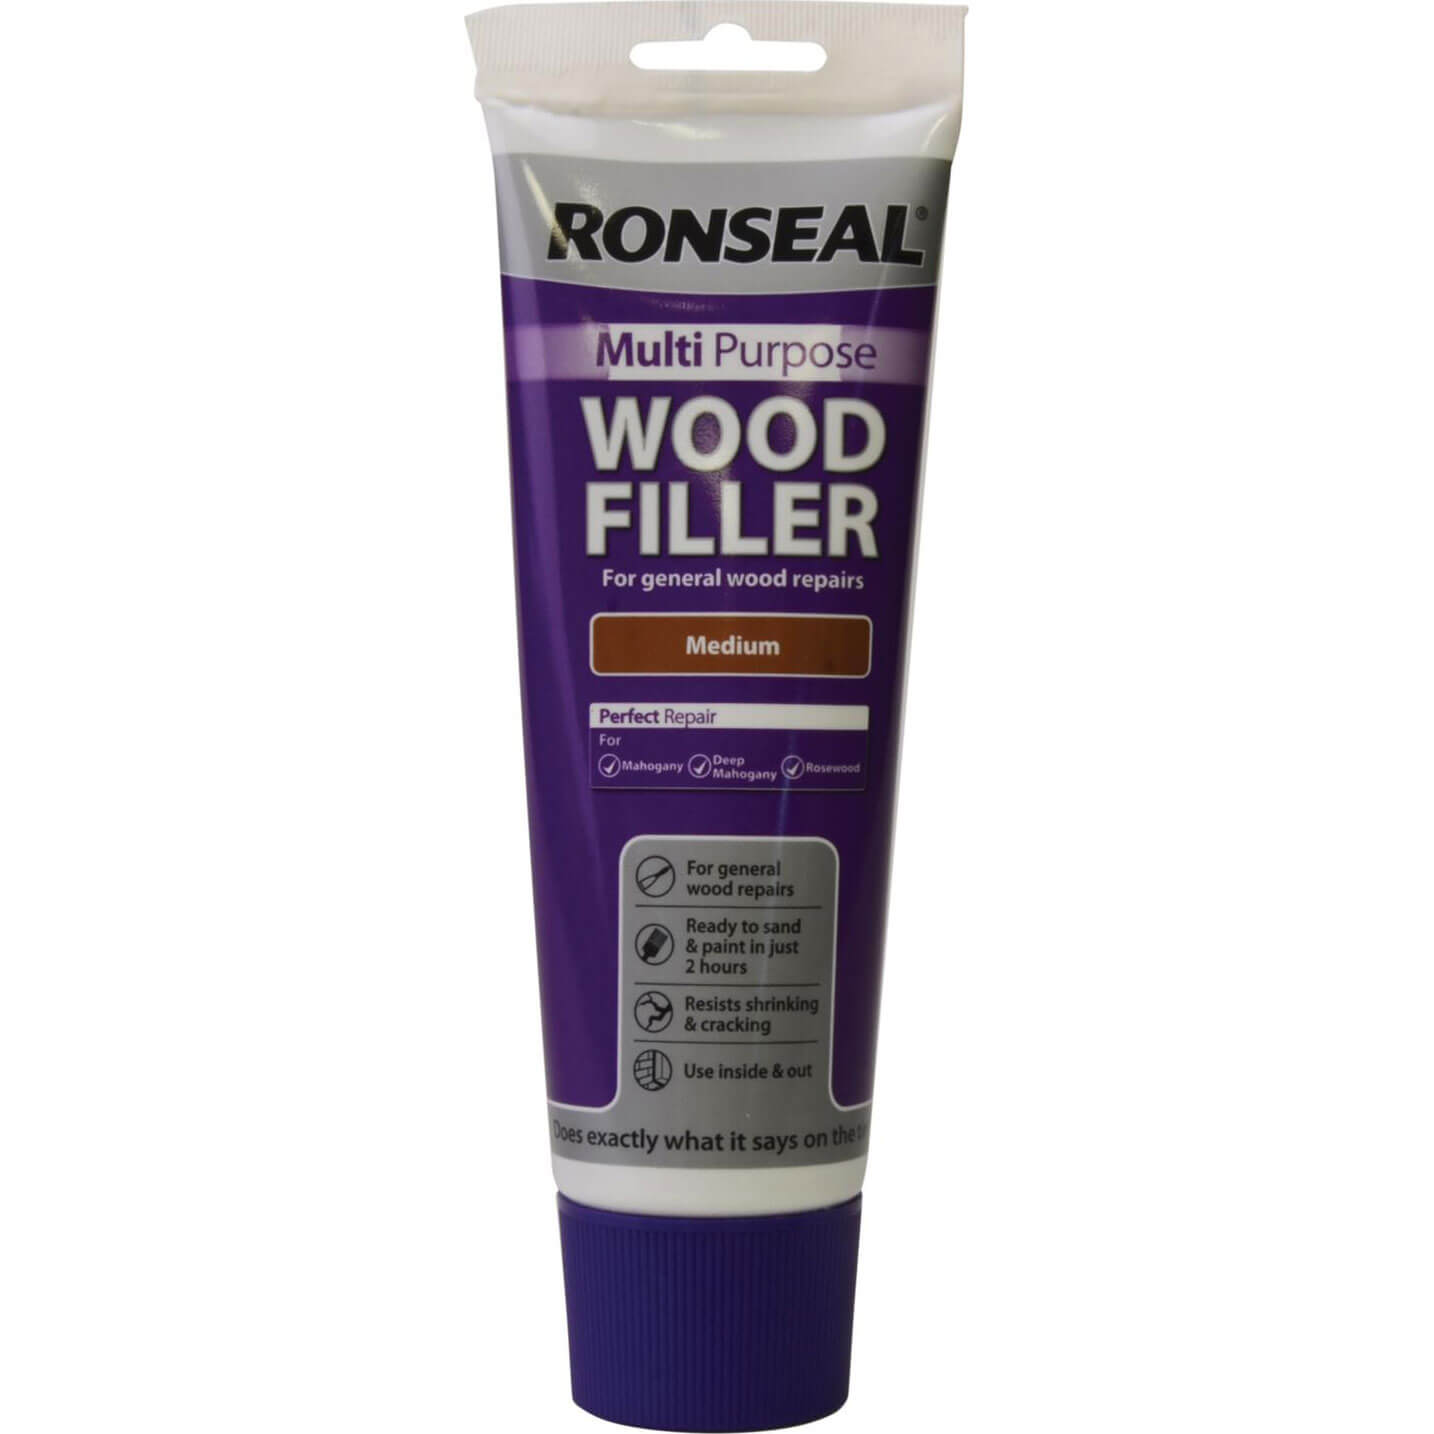 Image of Ronseal Multi Purpose Wood Filler Tube Medium 325g